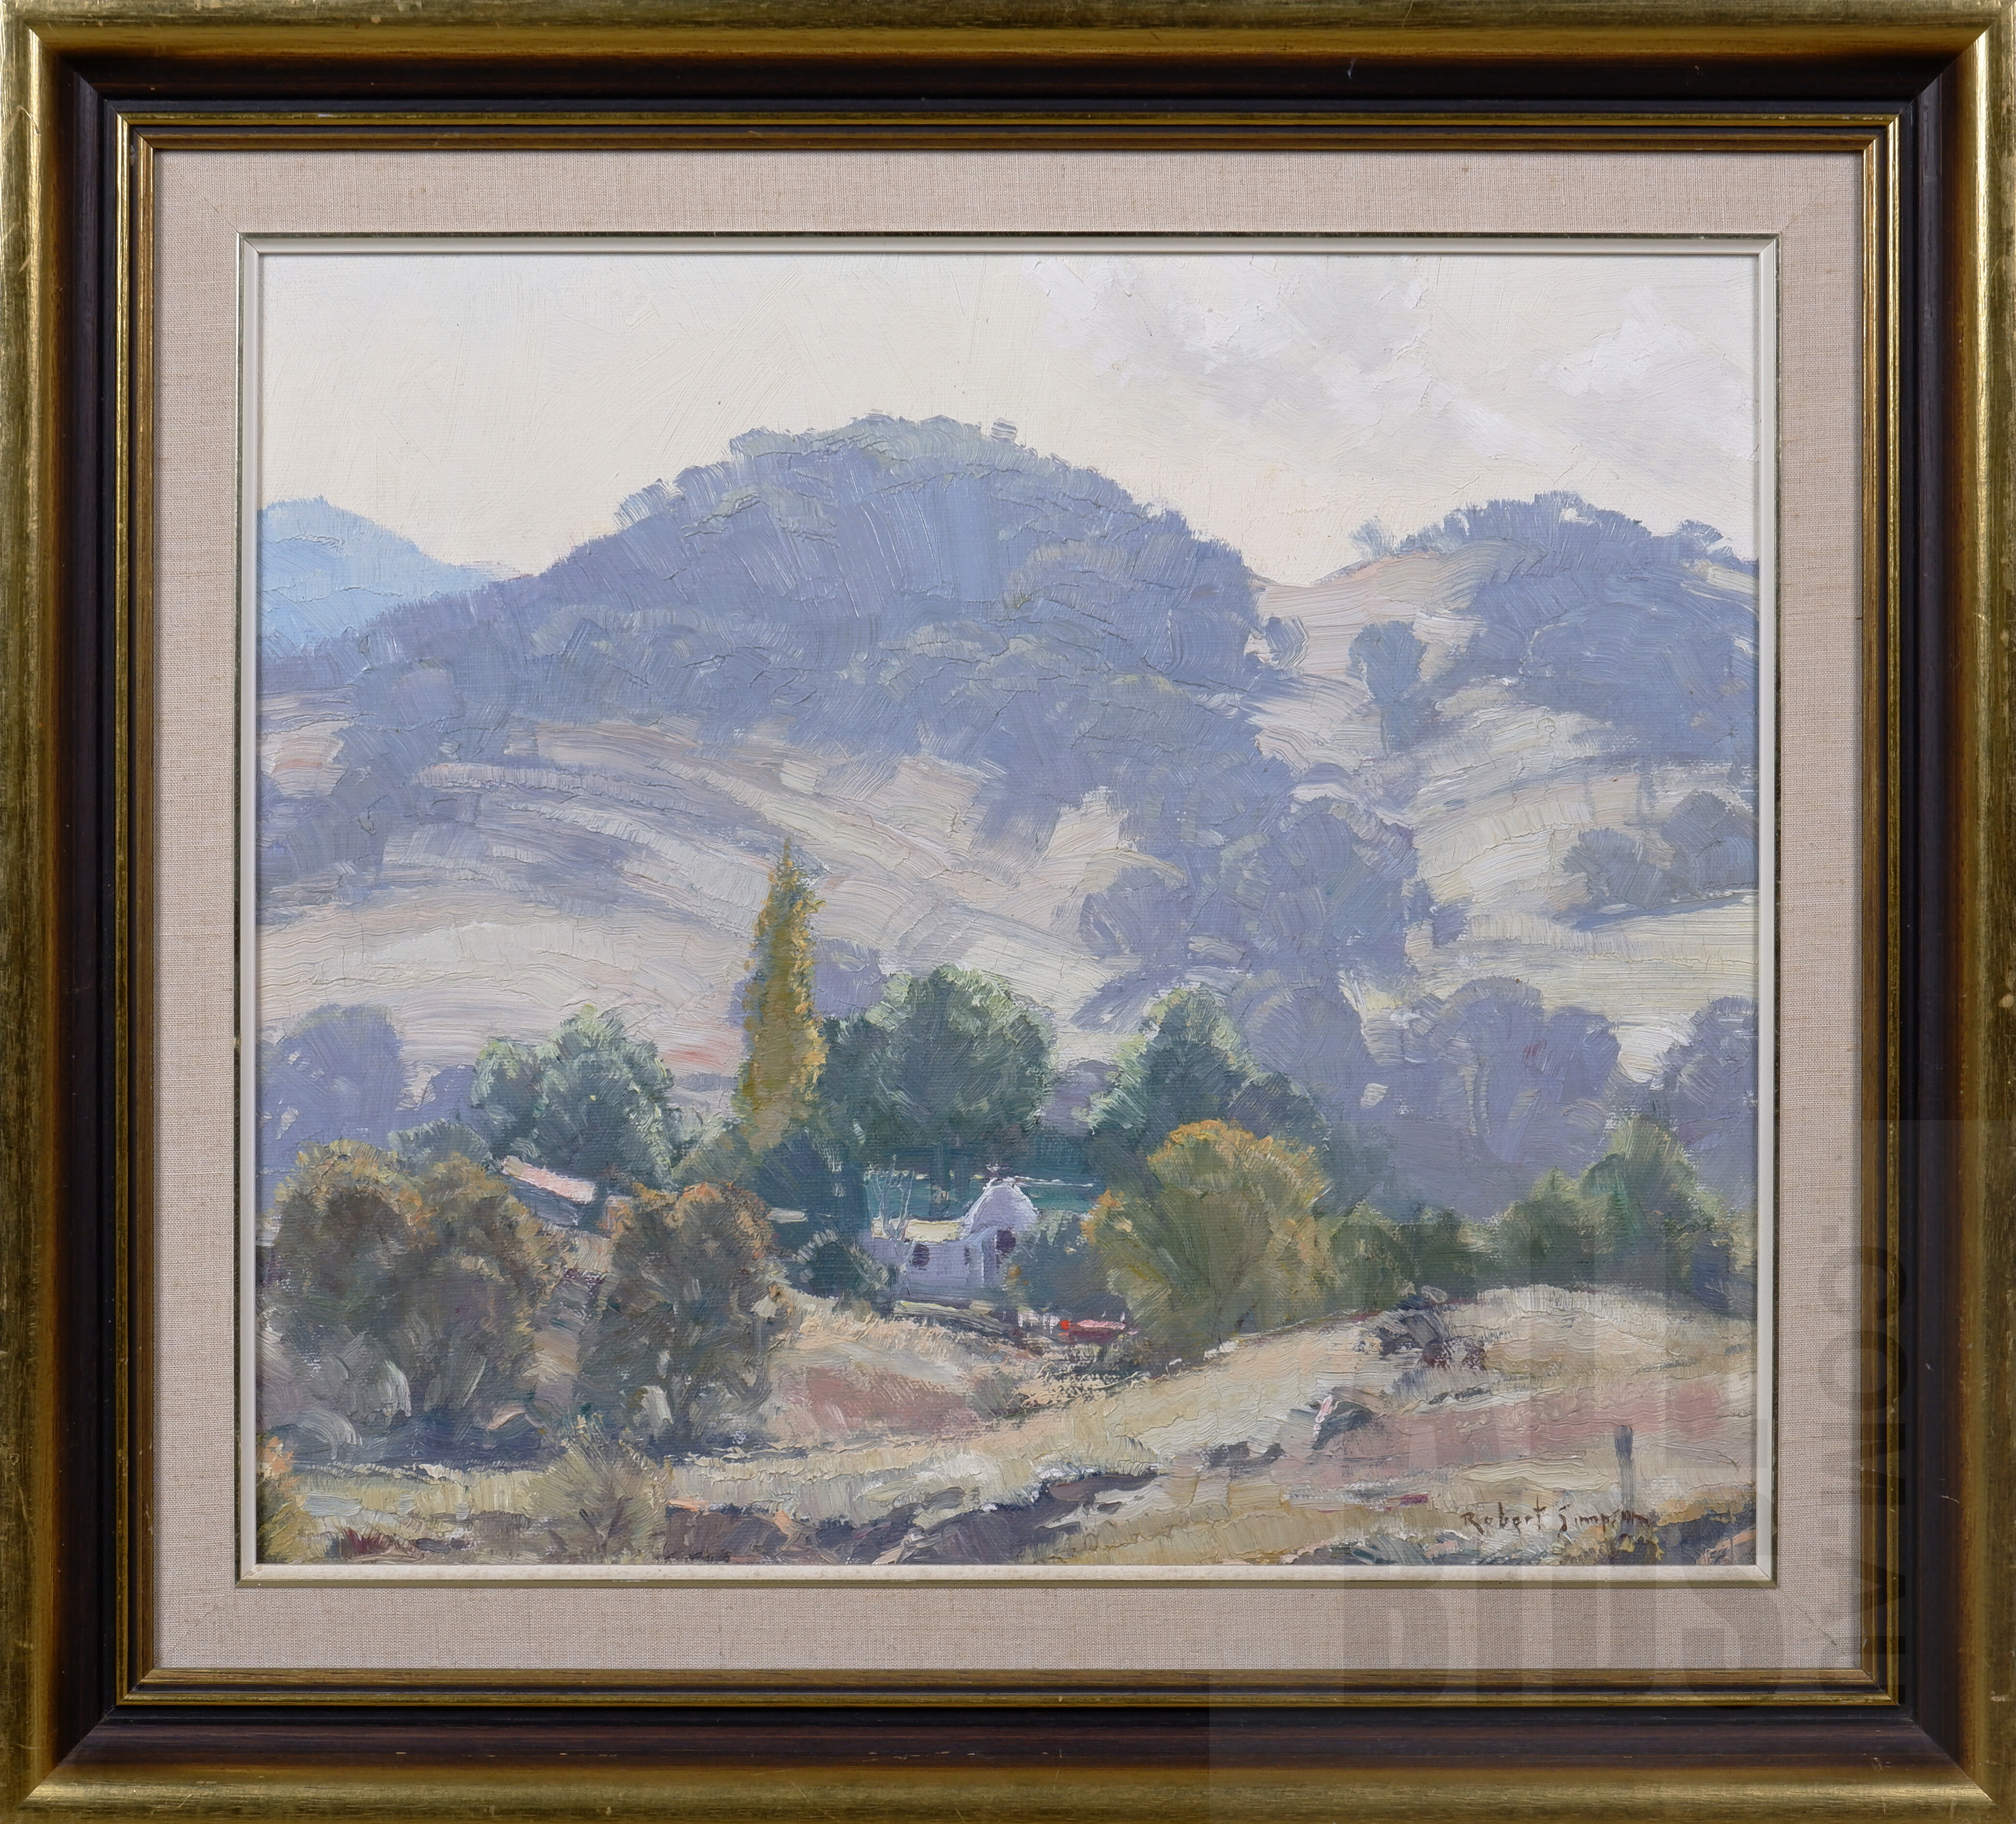 'Robert Simpson (born 1955), Spring Creek Station, Tharwa, Oil on Board, 33 x 38 cm'